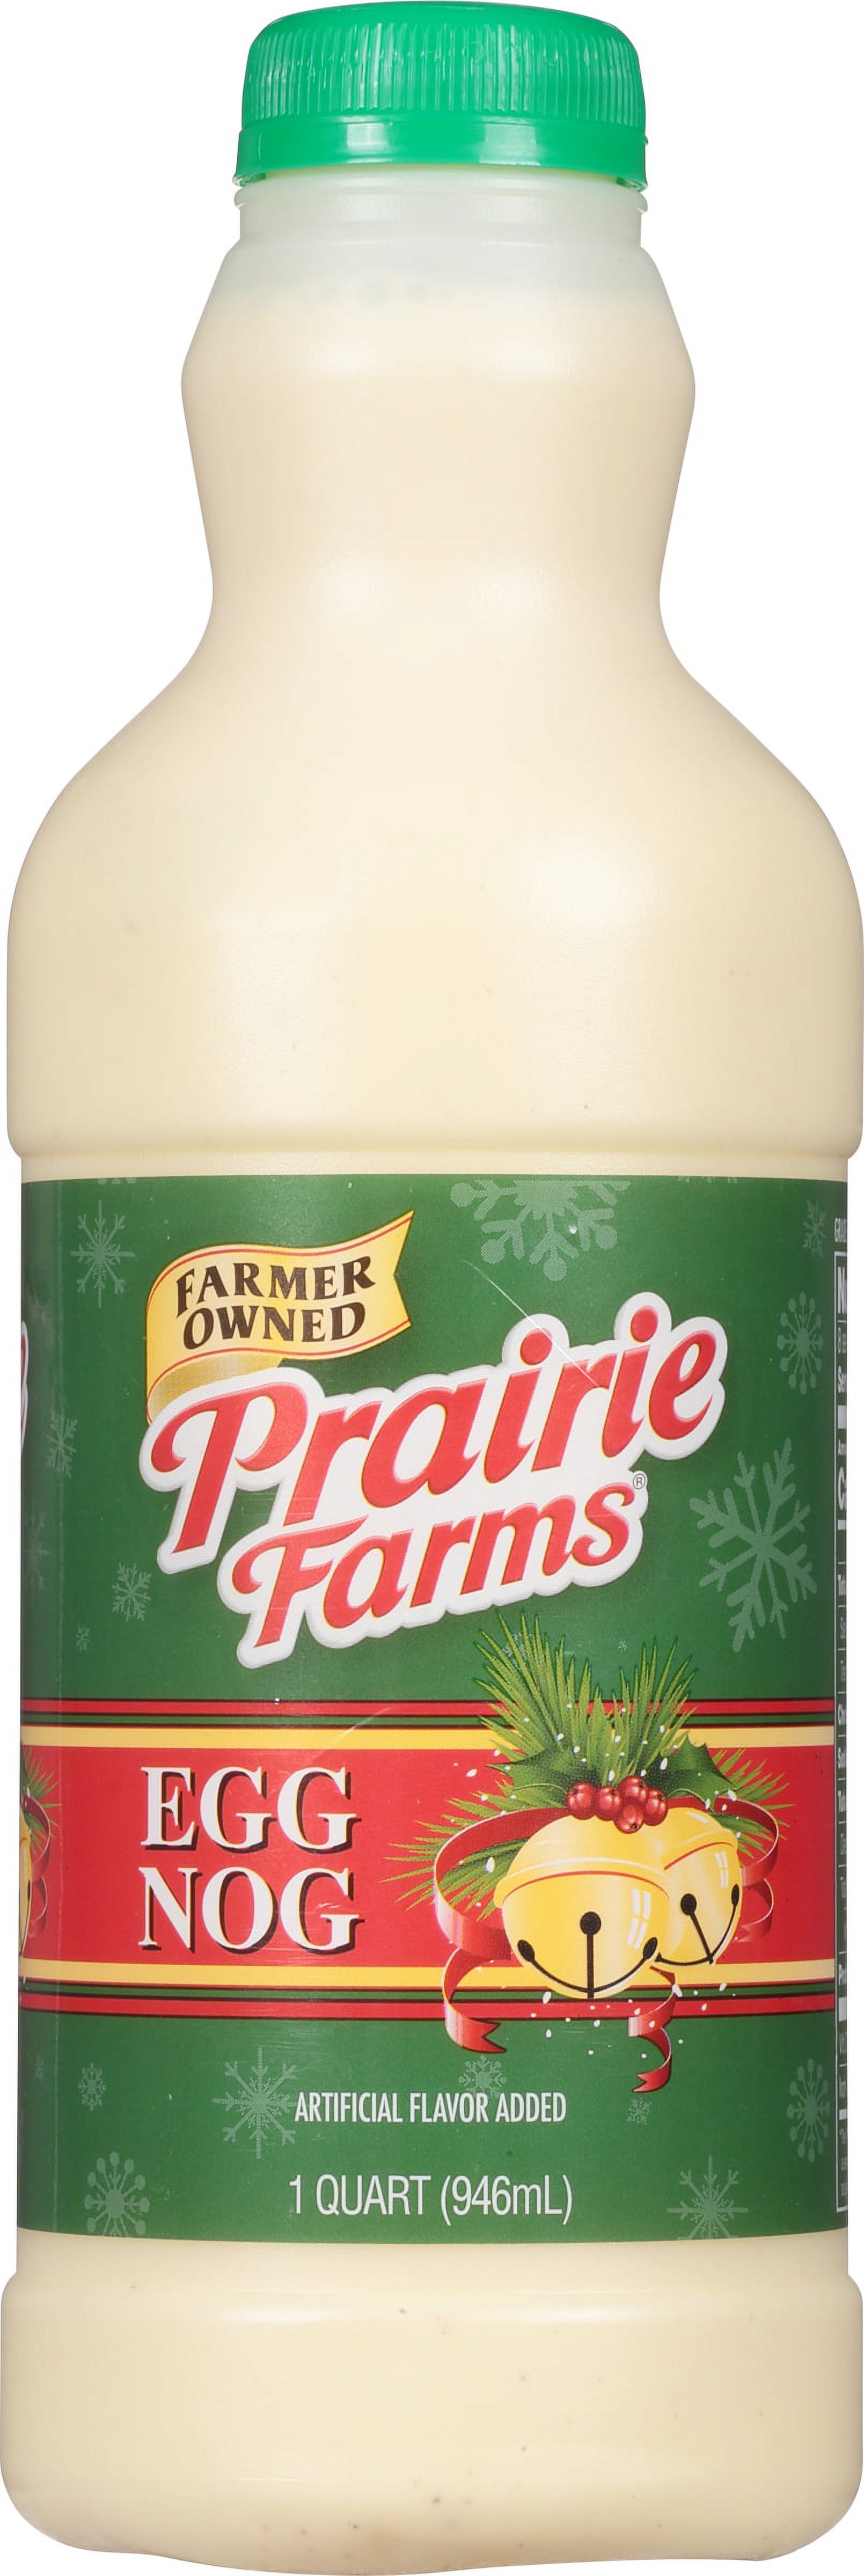 Prairie Farms Dairy Eggnog 1 Quart